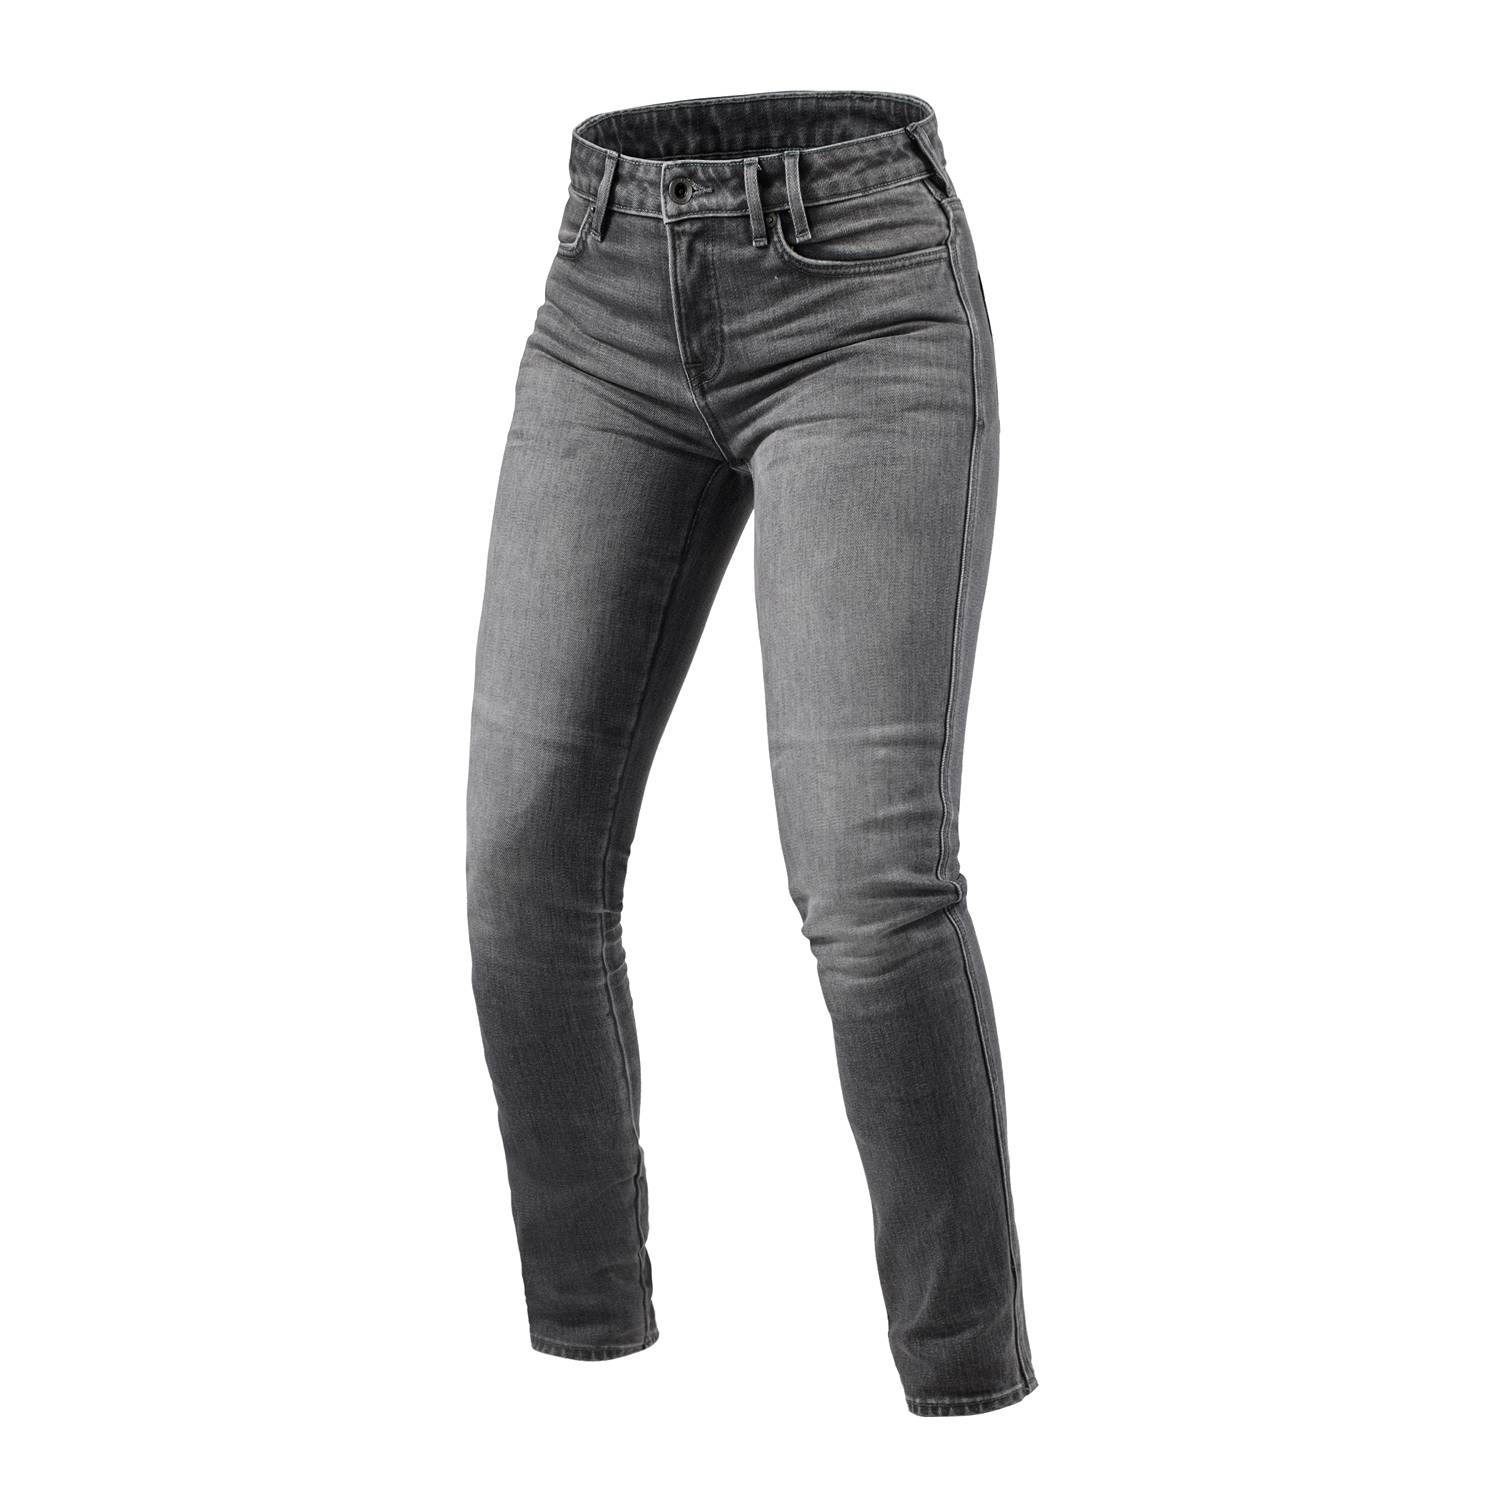 Image of REV'IT! Jeans Shelby 2 Ladies SK Medium Grey Stone L32 Size L32/W24 EN